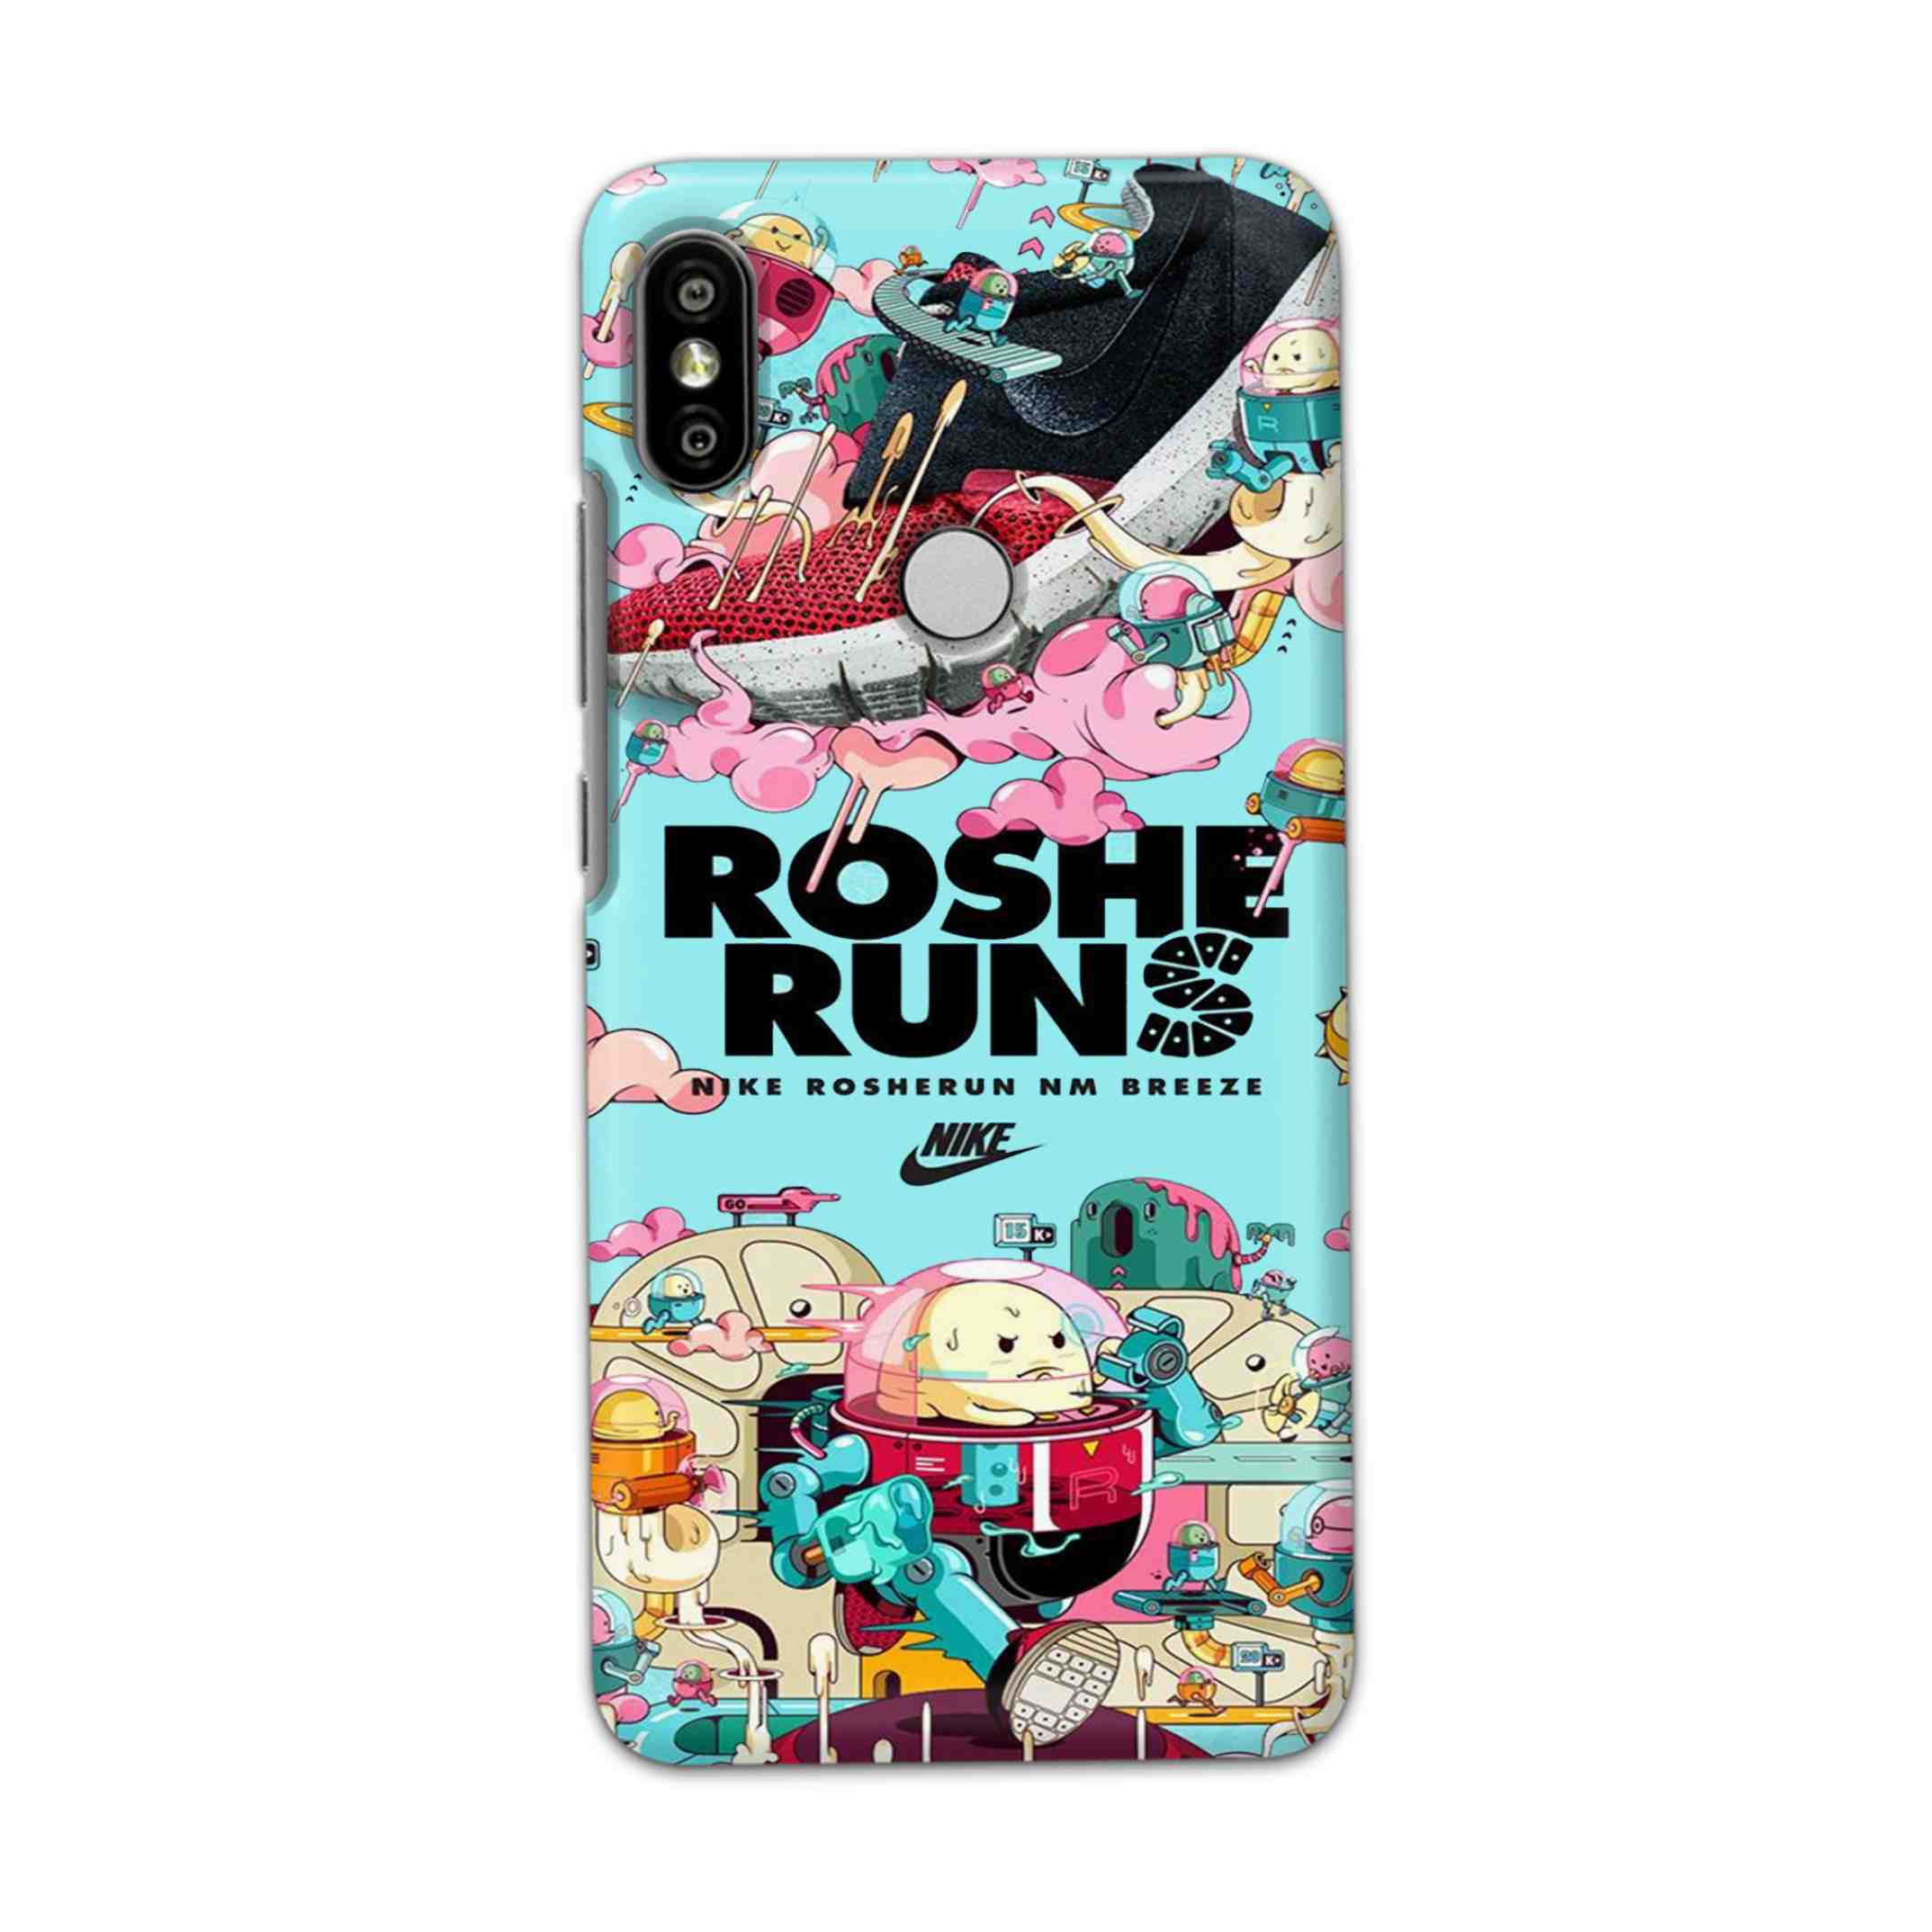 Buy Roshe Runs Hard Back Mobile Phone Case Cover For Redmi S2 / Y2 Online